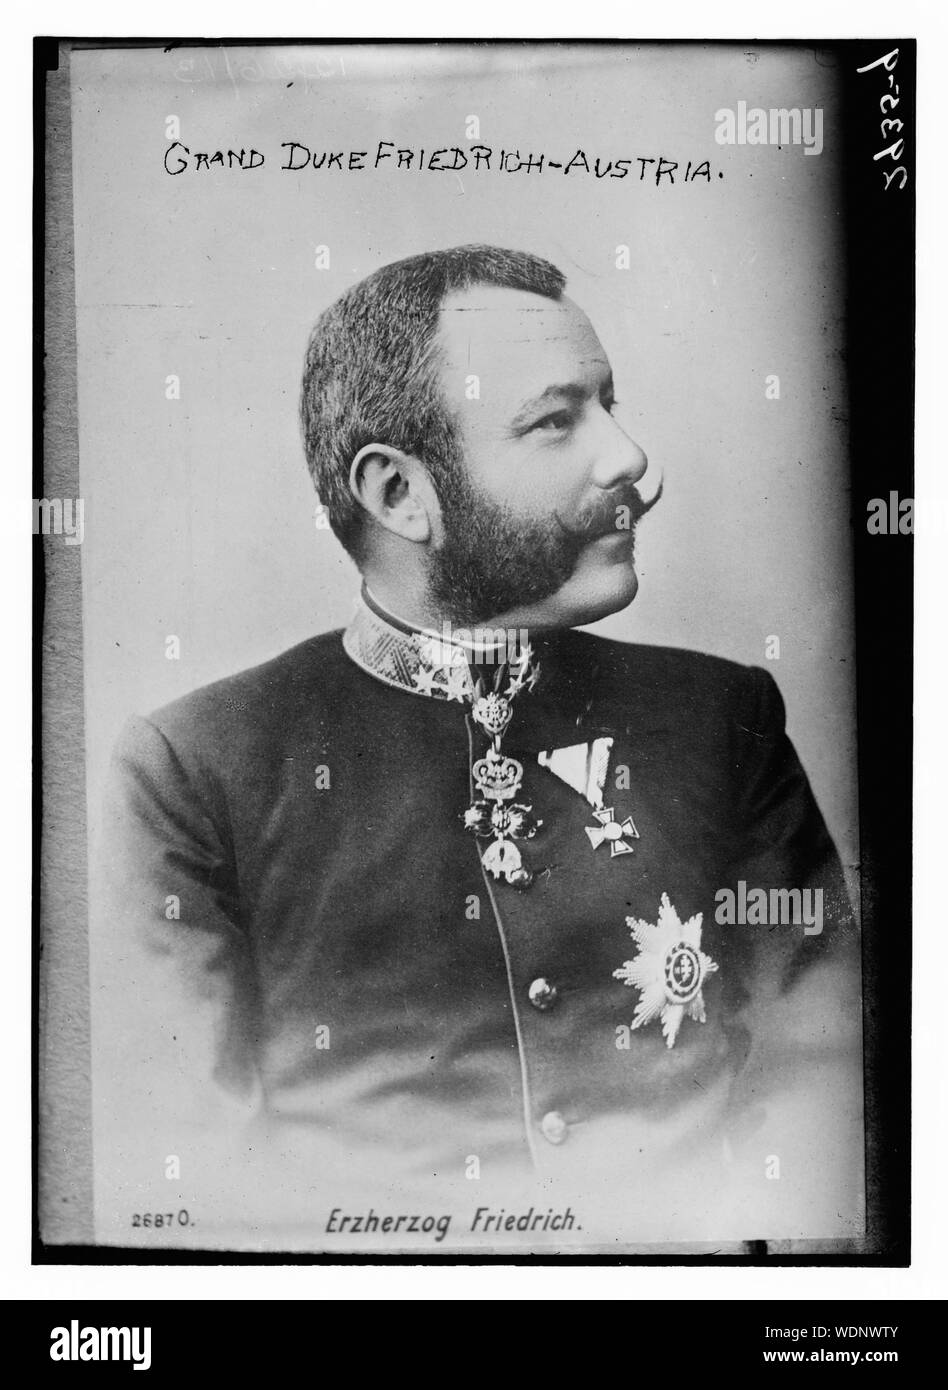 Grand Duke Friedrich - Austria Abstract/medium: 1 negative : glass  5 x 7 in. or smaller. Stock Photo